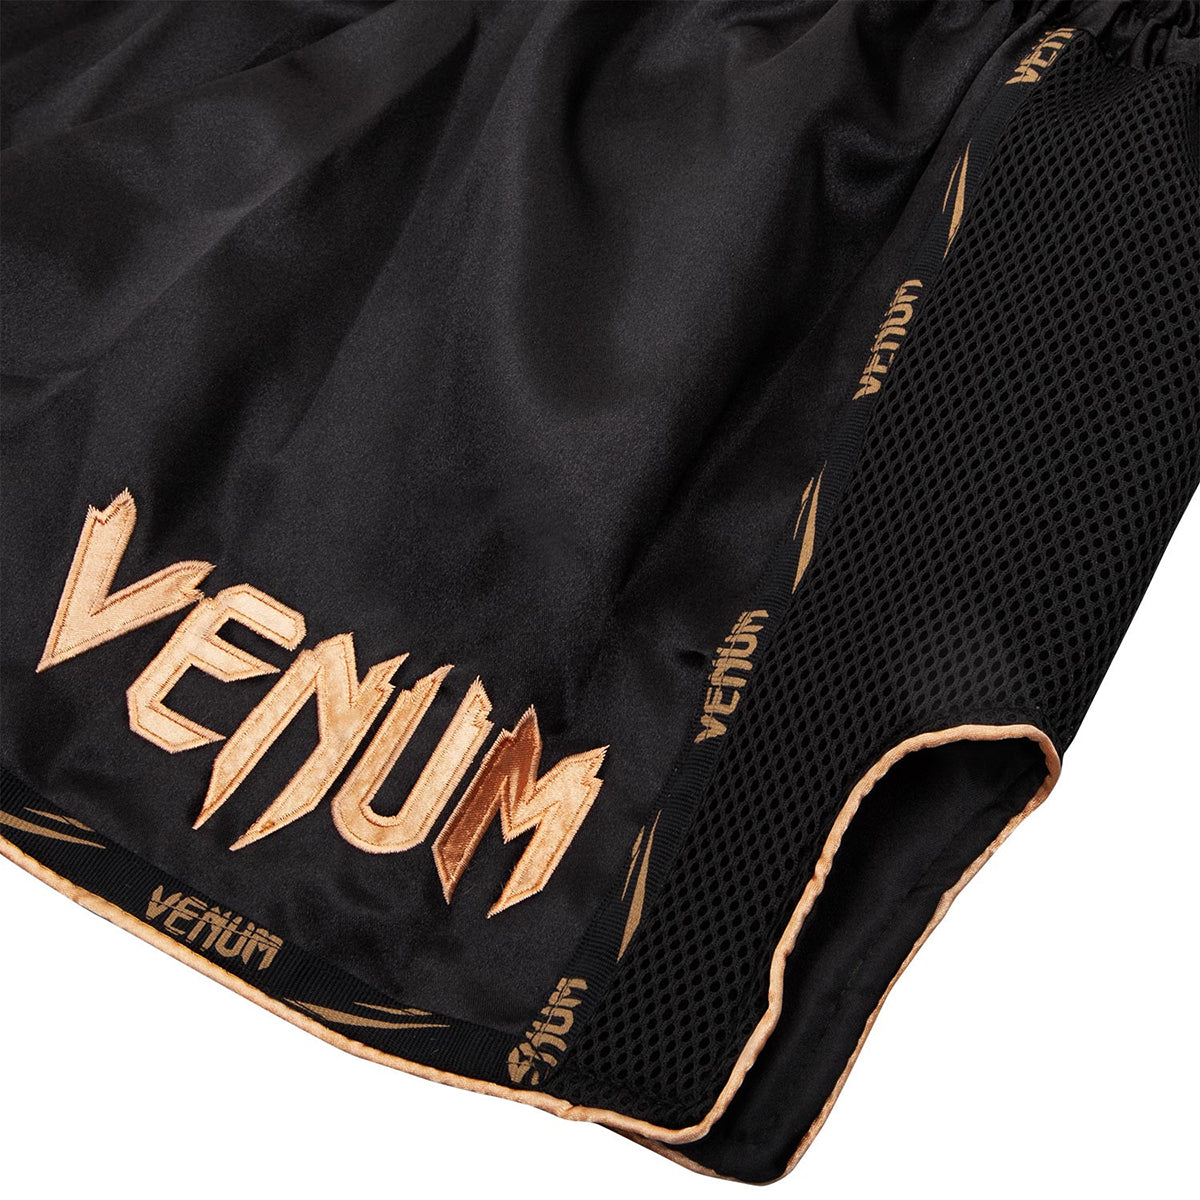 Venum Giant Lightweight Muay Thai Shorts - Black/Gold Venum